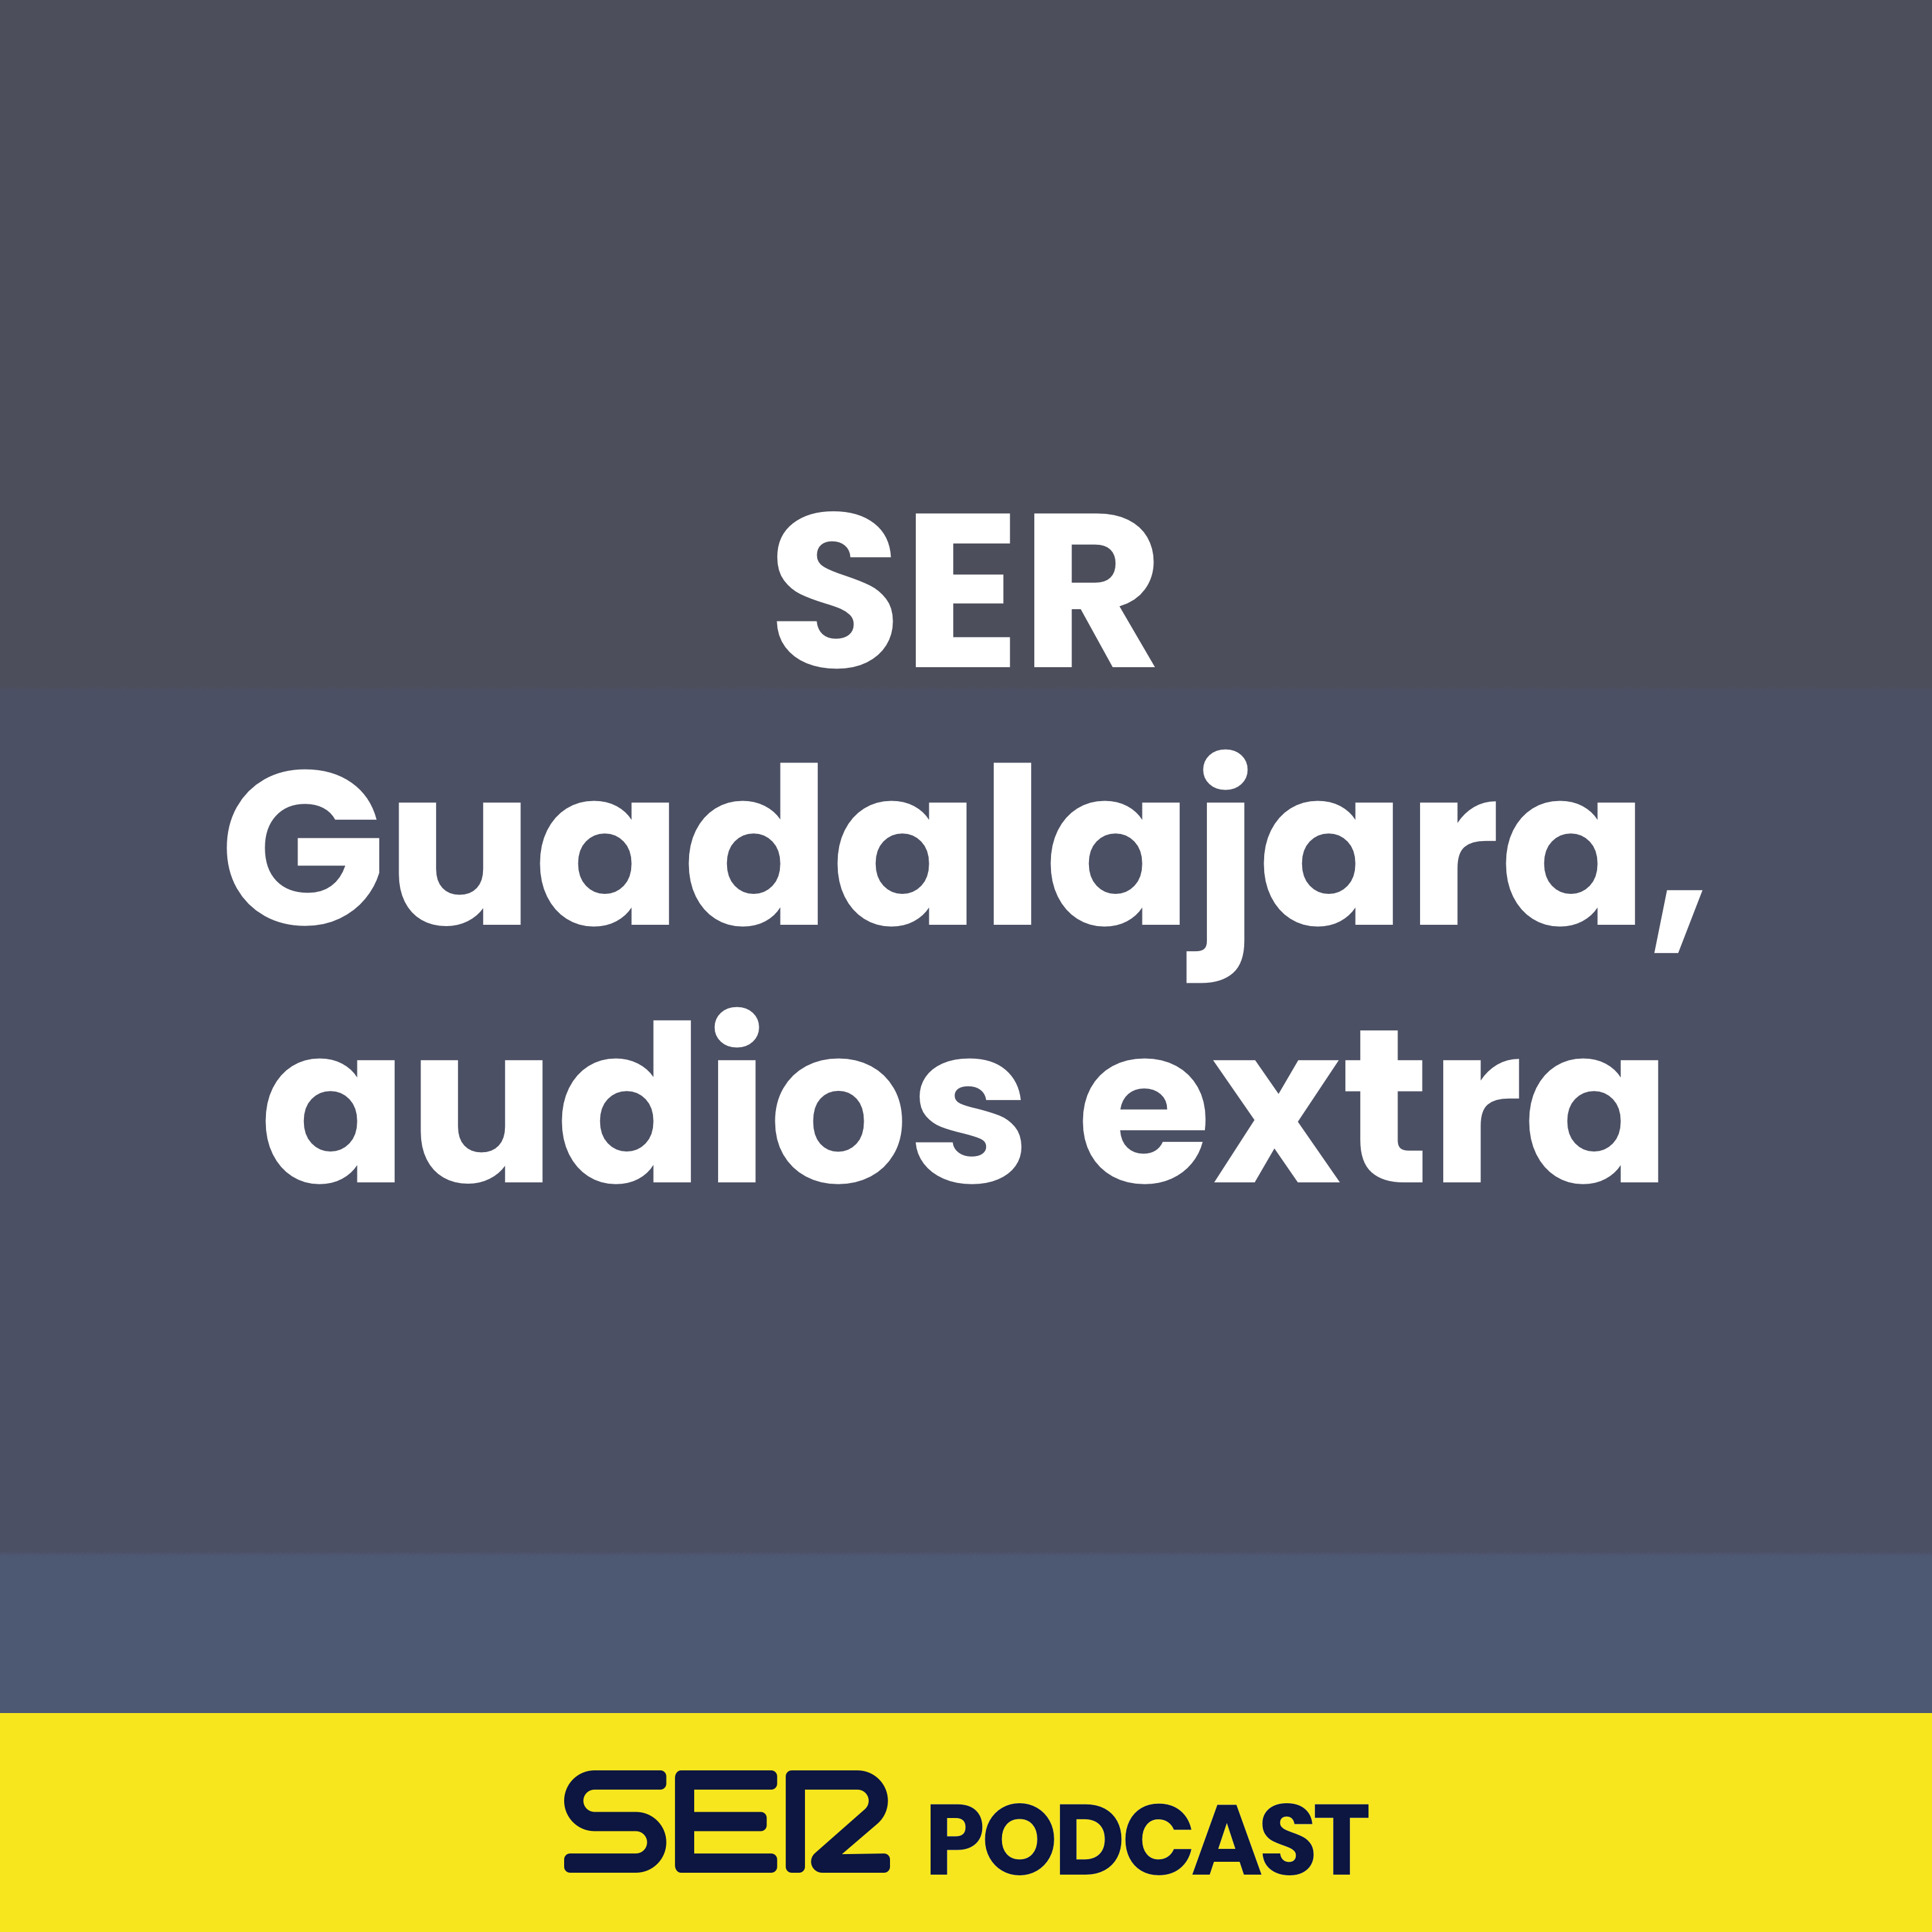 SER Guadalajara, audios extra